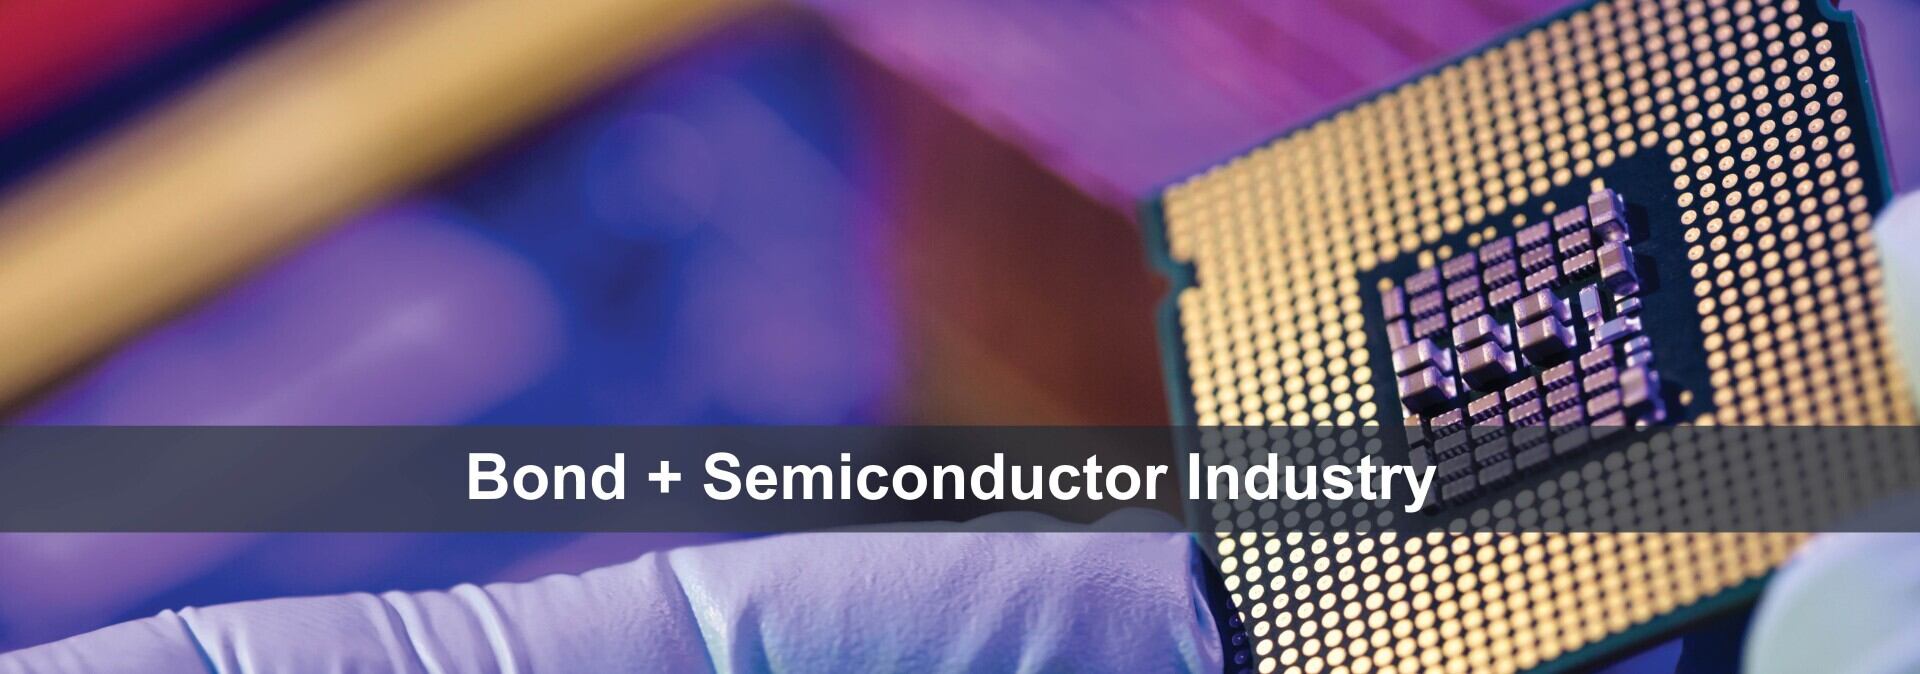 Bond + Semiconductor Industry